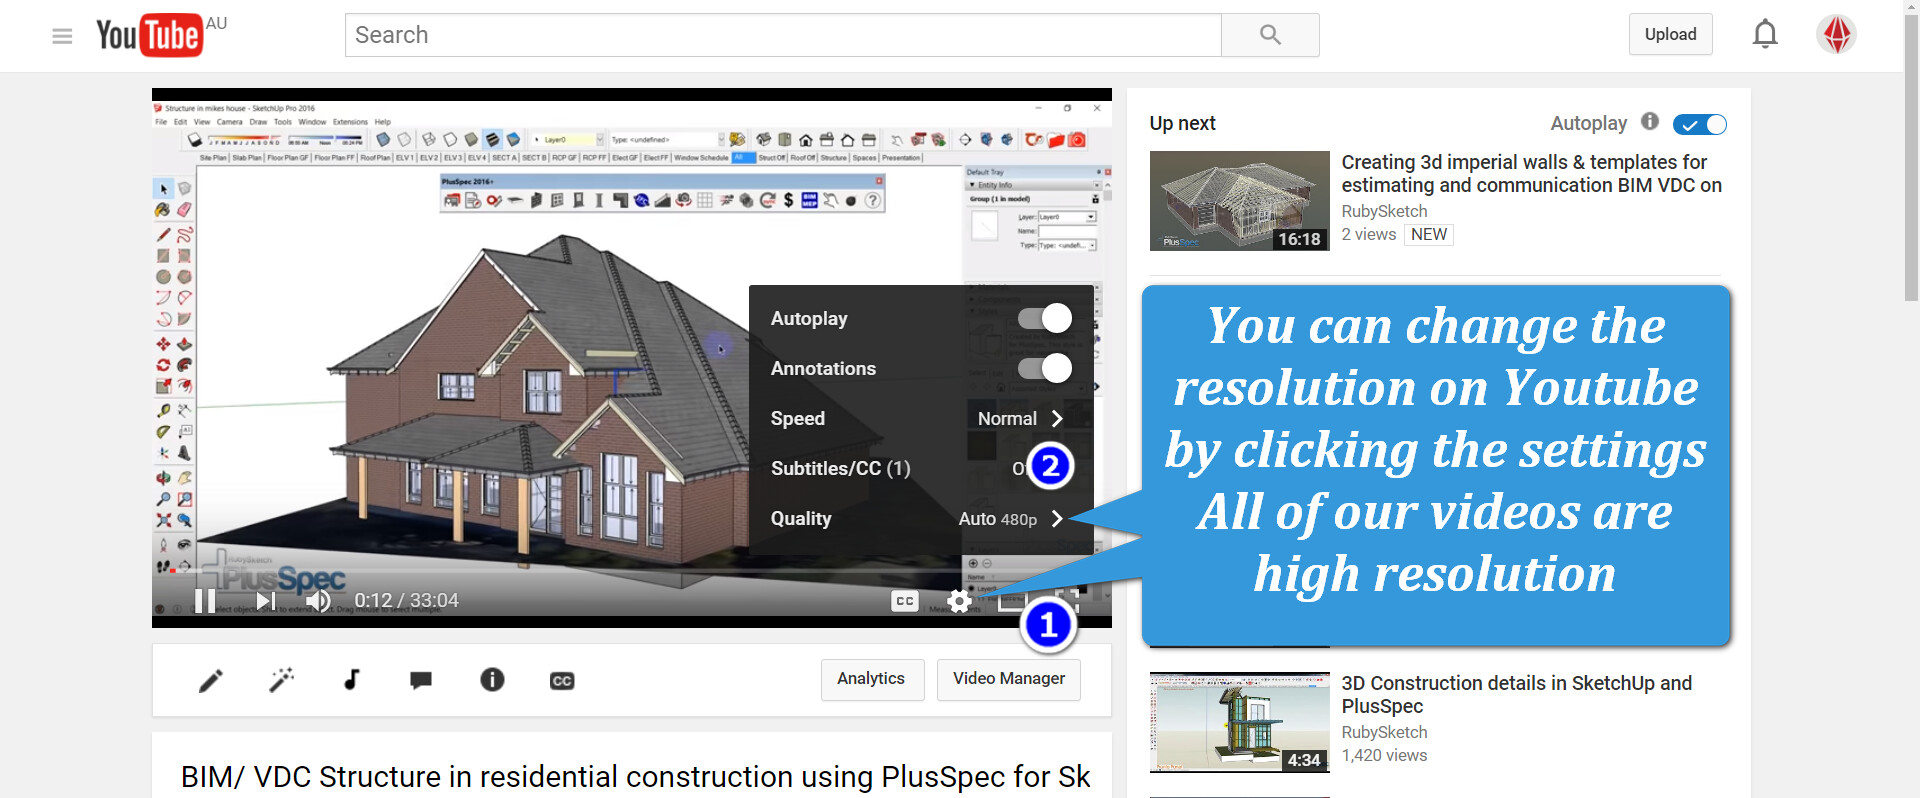 Youtube resolution on PlusSpec videos.jpg